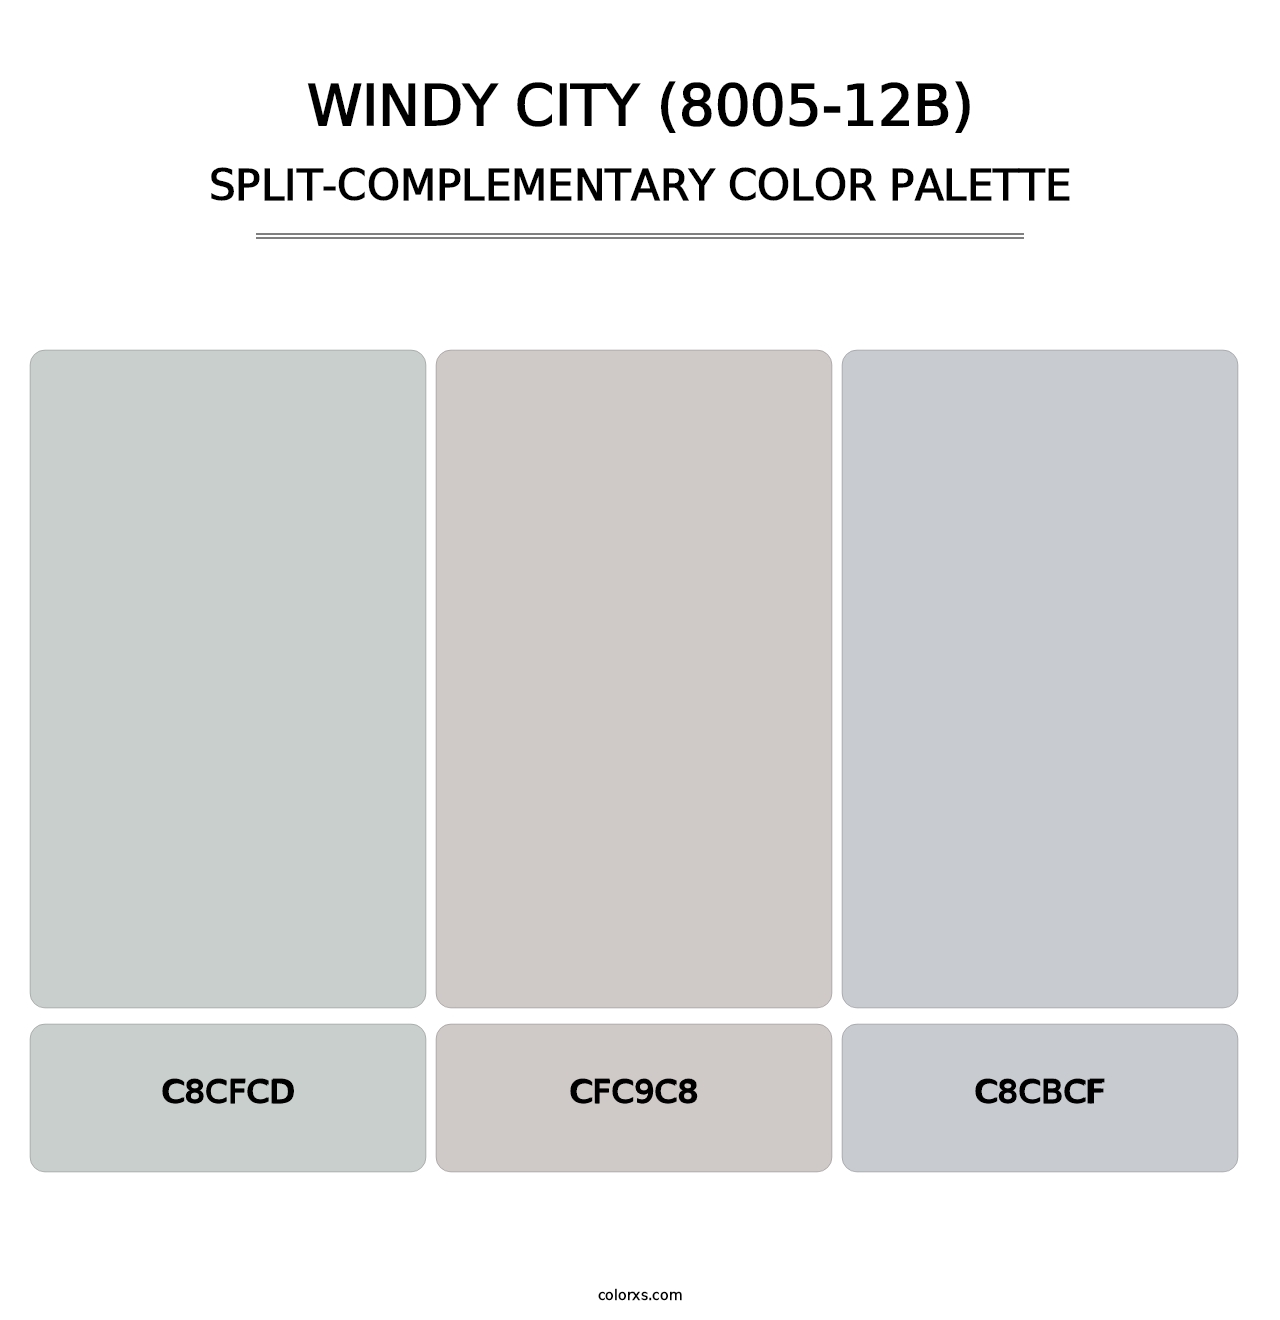 Windy City (8005-12B) - Split-Complementary Color Palette